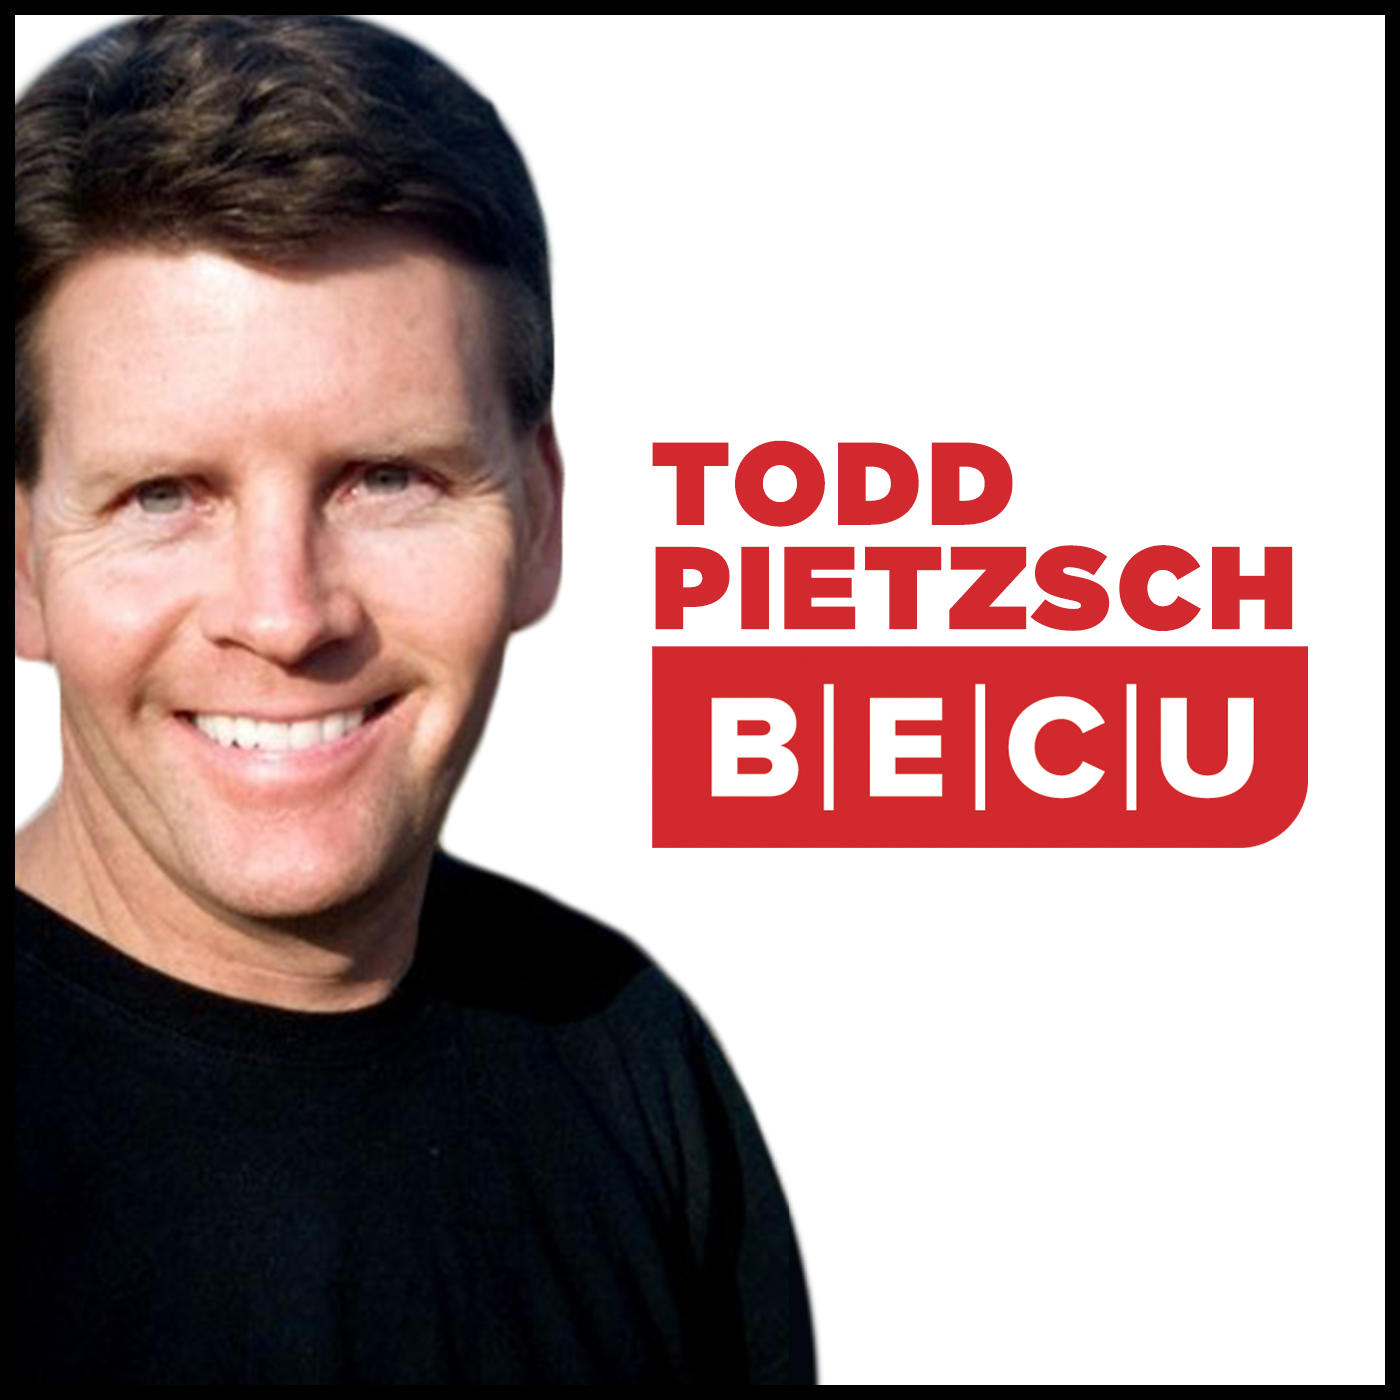 Todd Pietzsch from BECU calls in!